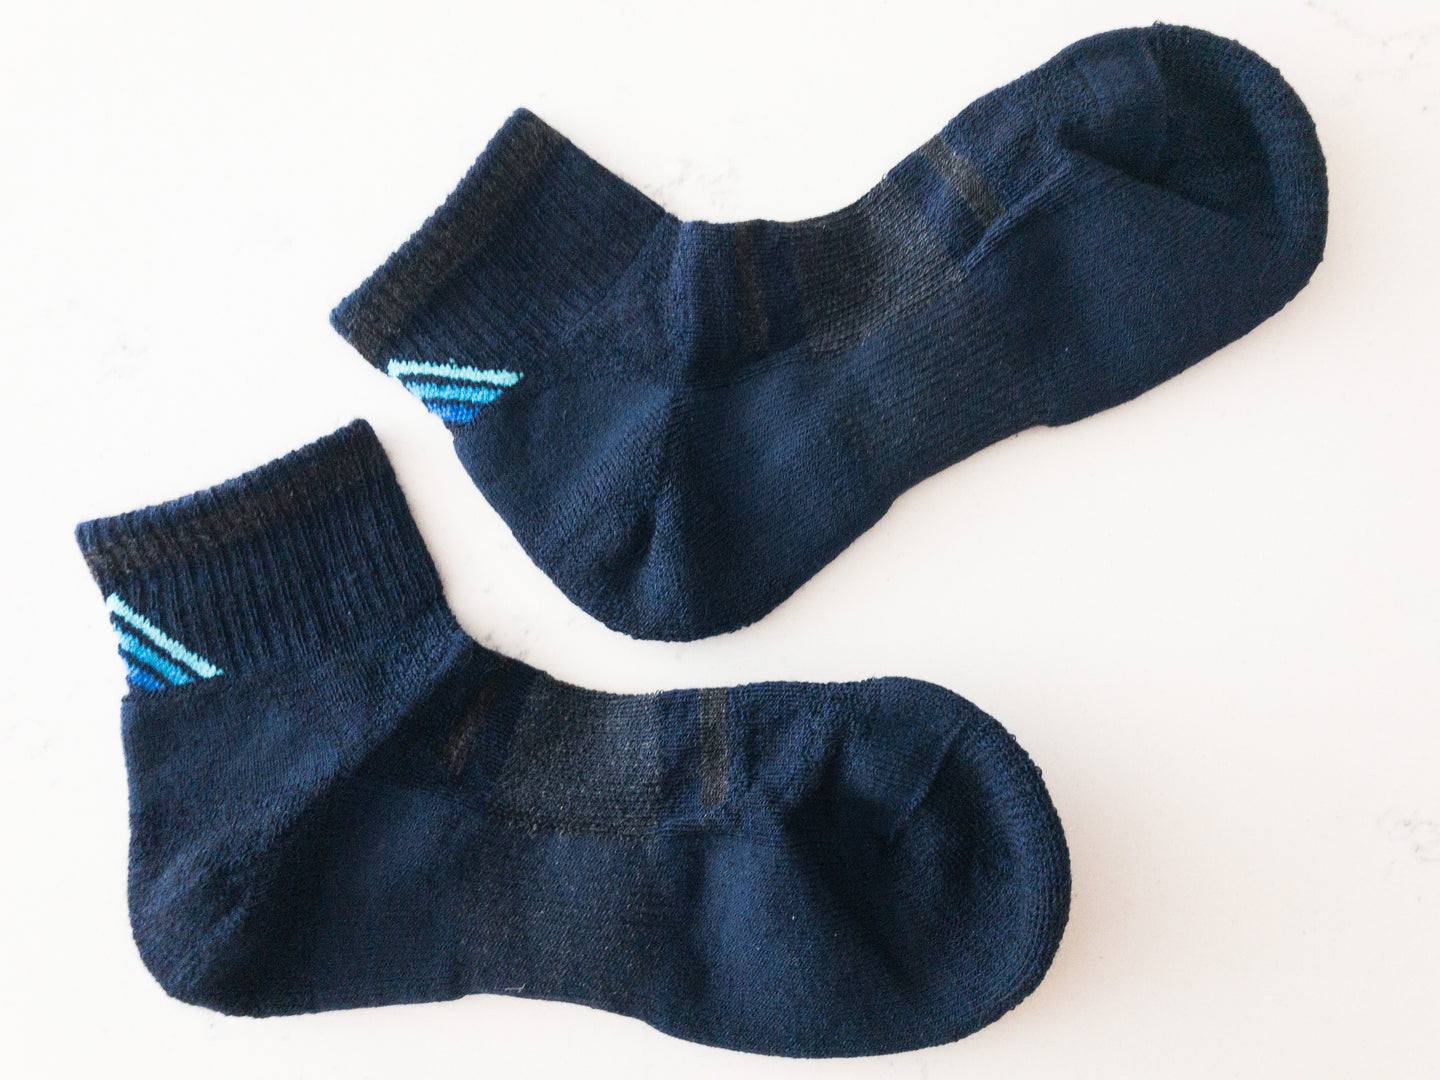 Merino Wool Performance Socks - Outdoor Lightweight Designed for Strenuous Activity